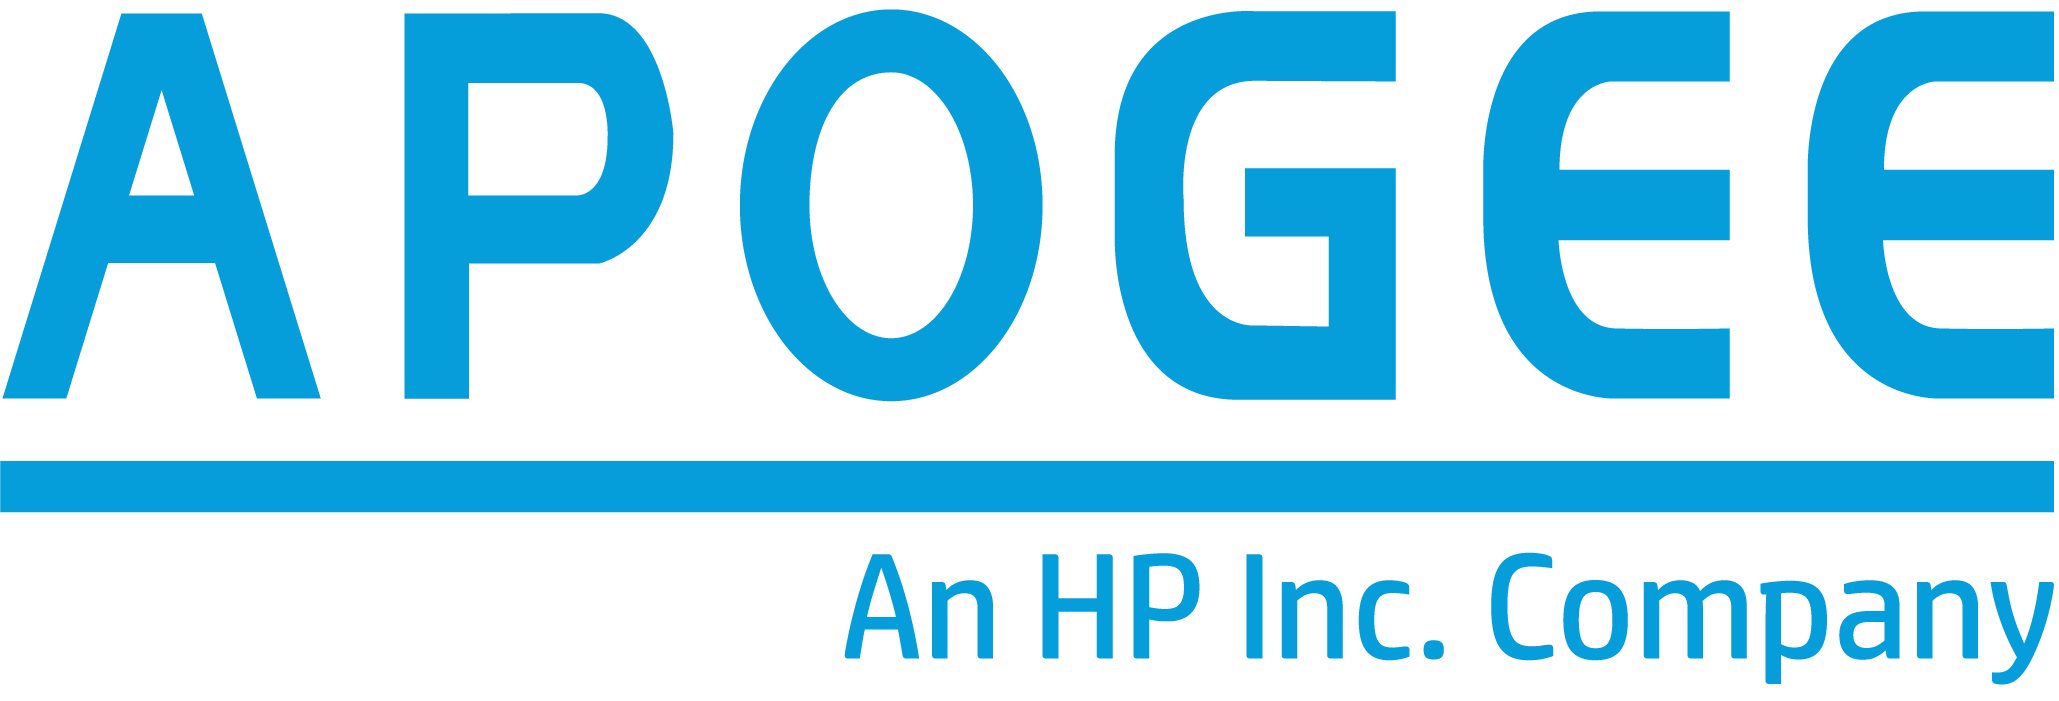 HP Corporation Logo - Apogee Corporation Apogee Corporation - Managed Print Services